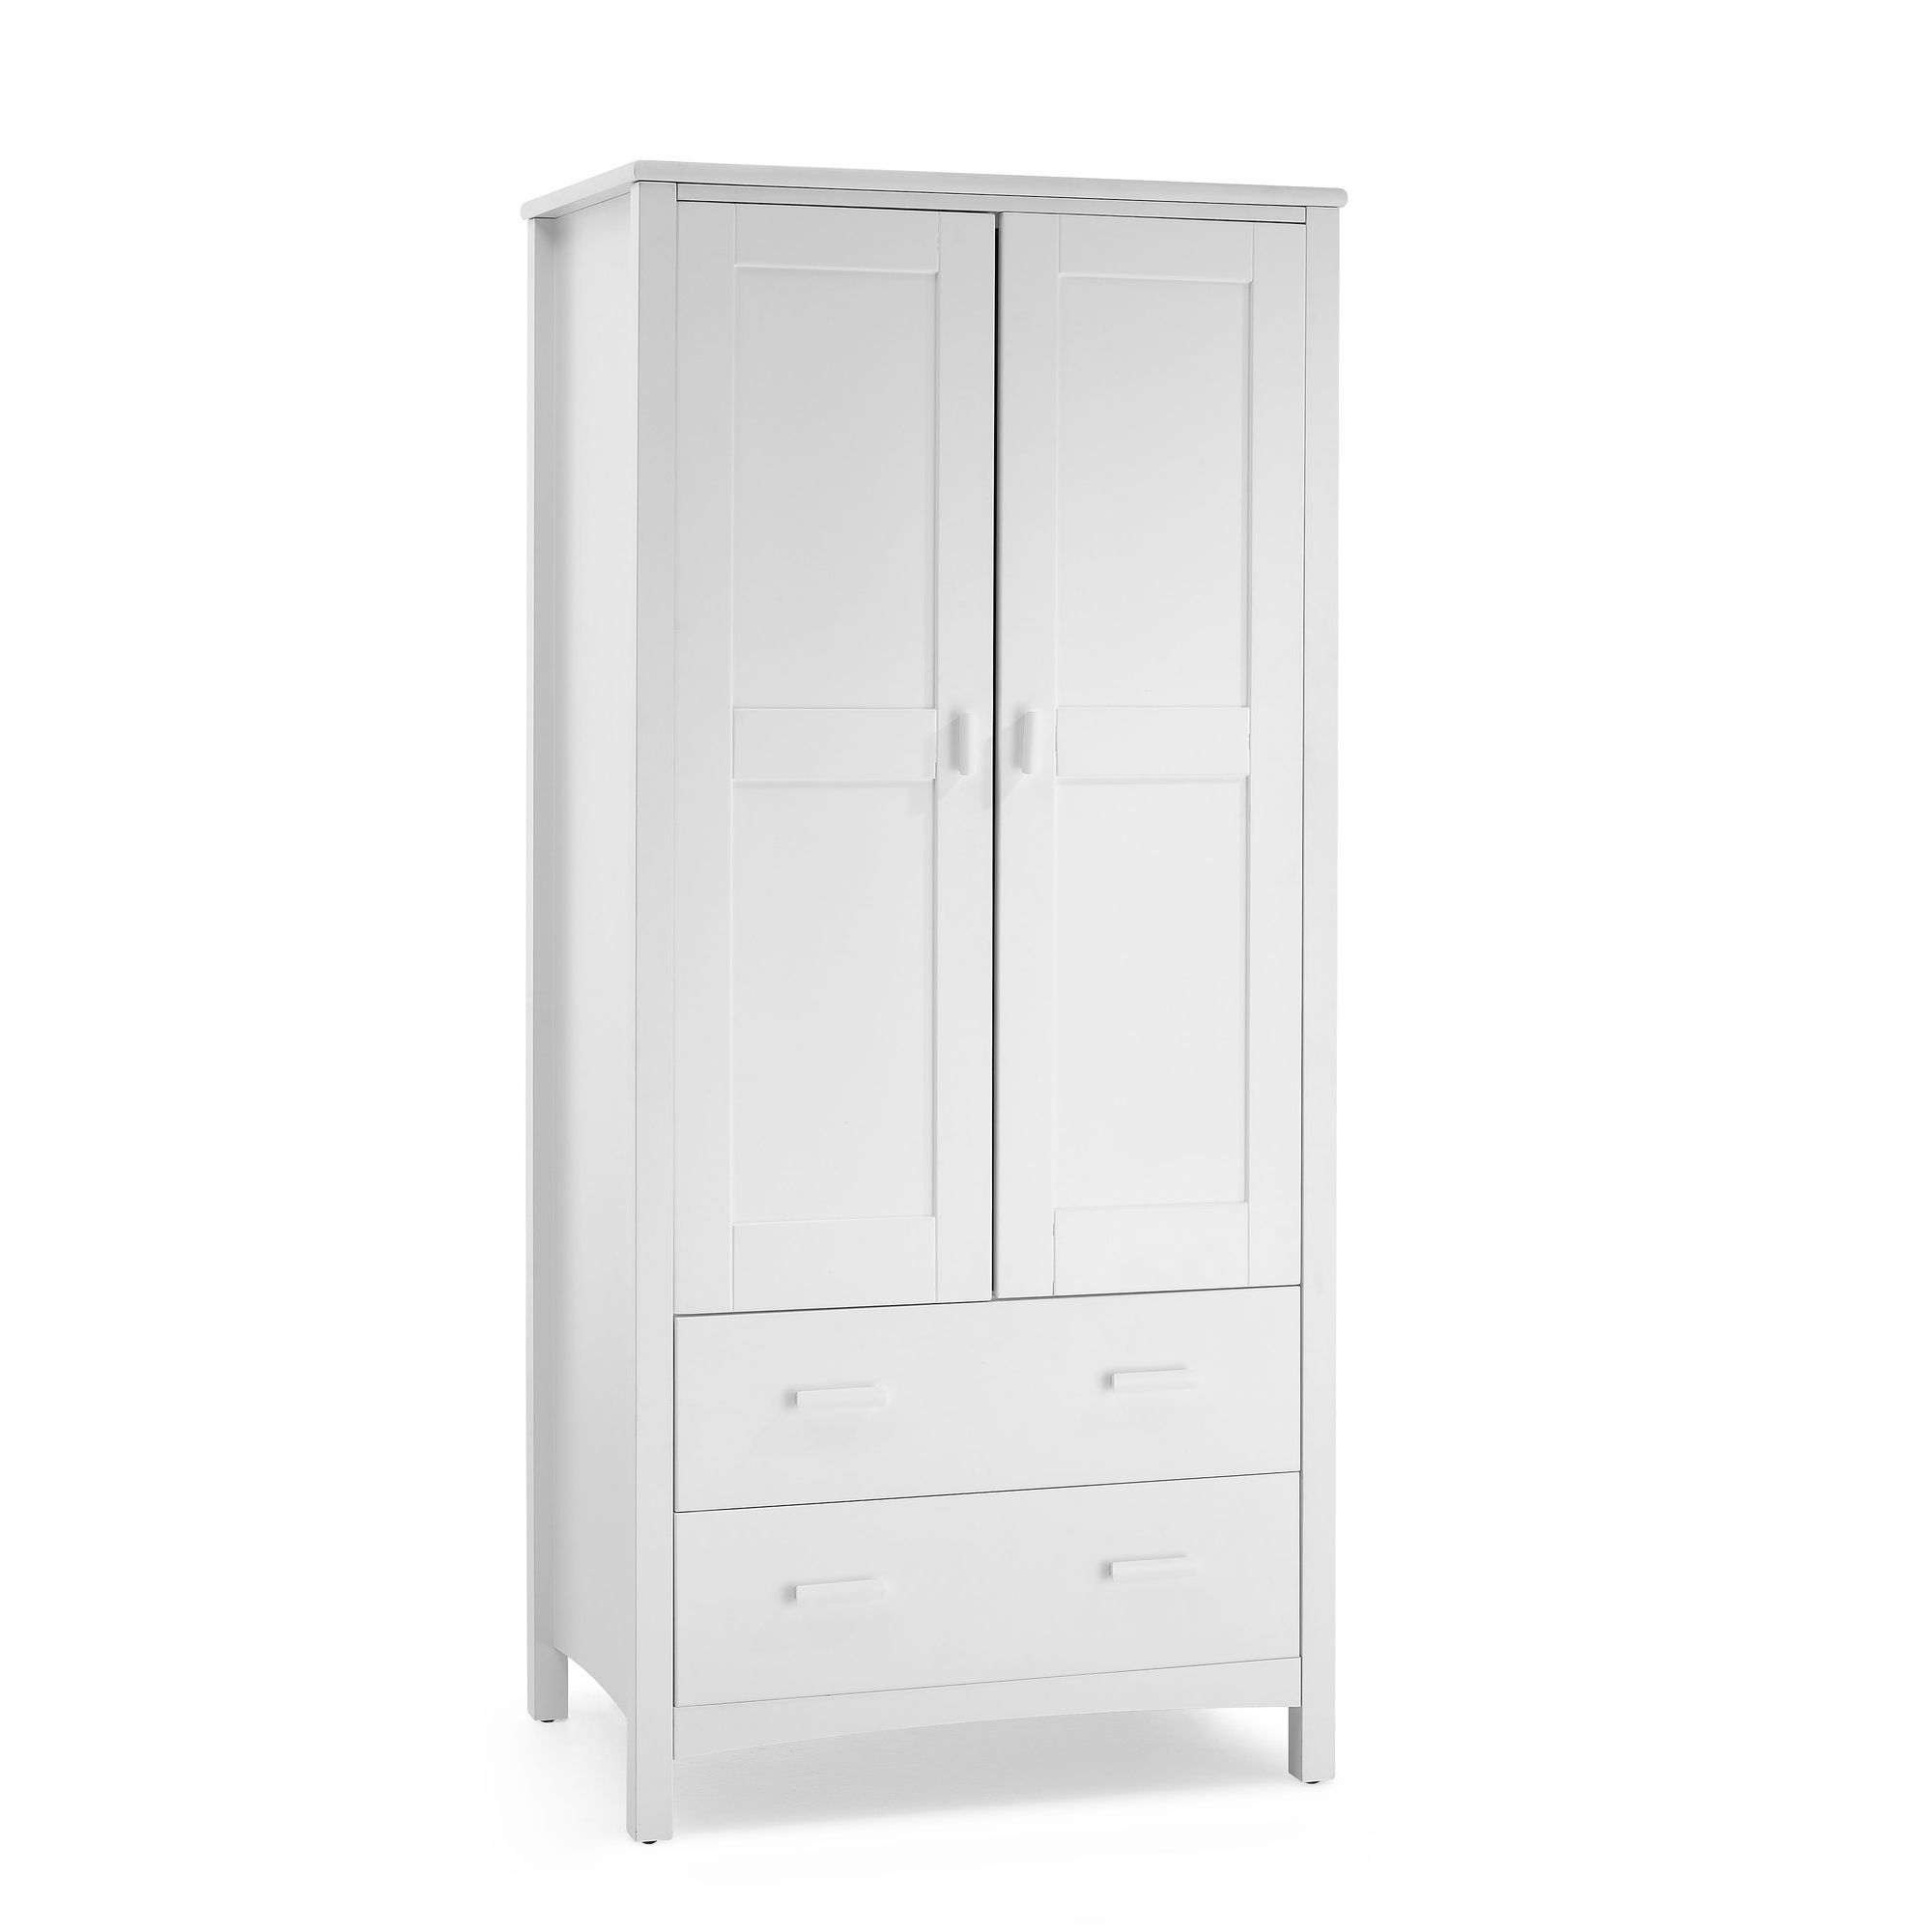 Serene Furnishings Eleanor 2 Door Wardrobe - Opal White at Tesco Direct